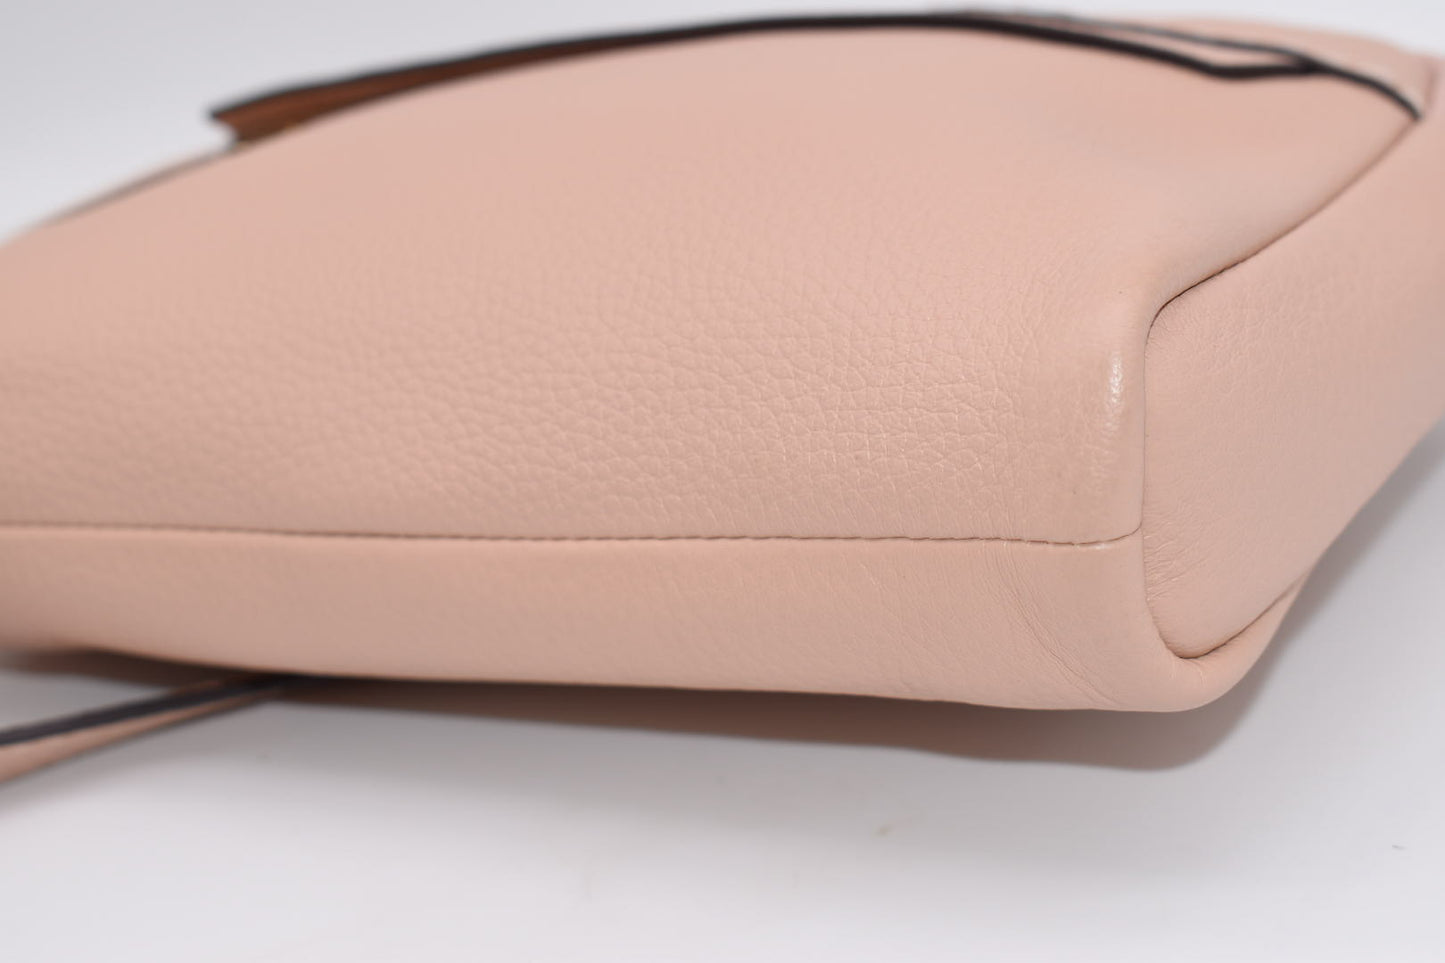 Vera Bradley RFID Mallory Petite Leather Crossbody in "Pink Sands"